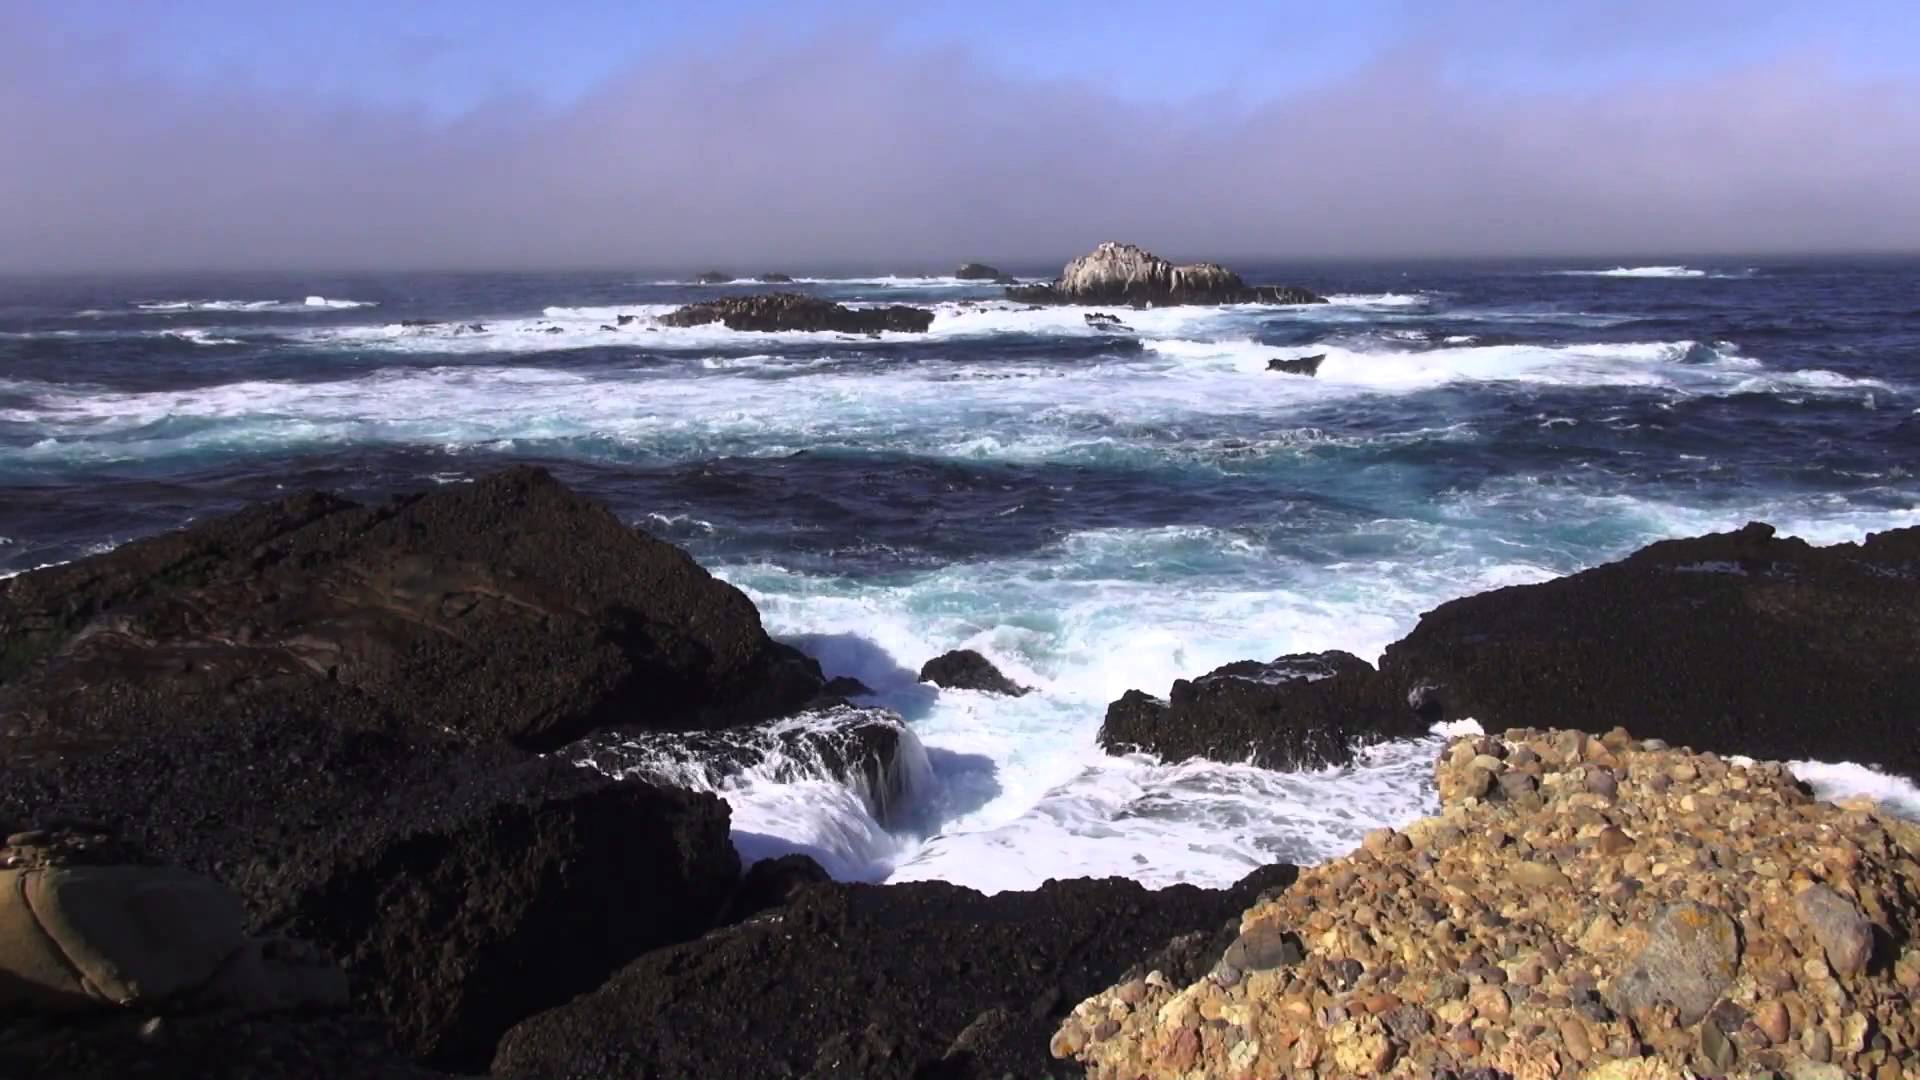 Relaxing Ocean Waves Crashing Into Rocky Shore (3 Hours) - YouTube